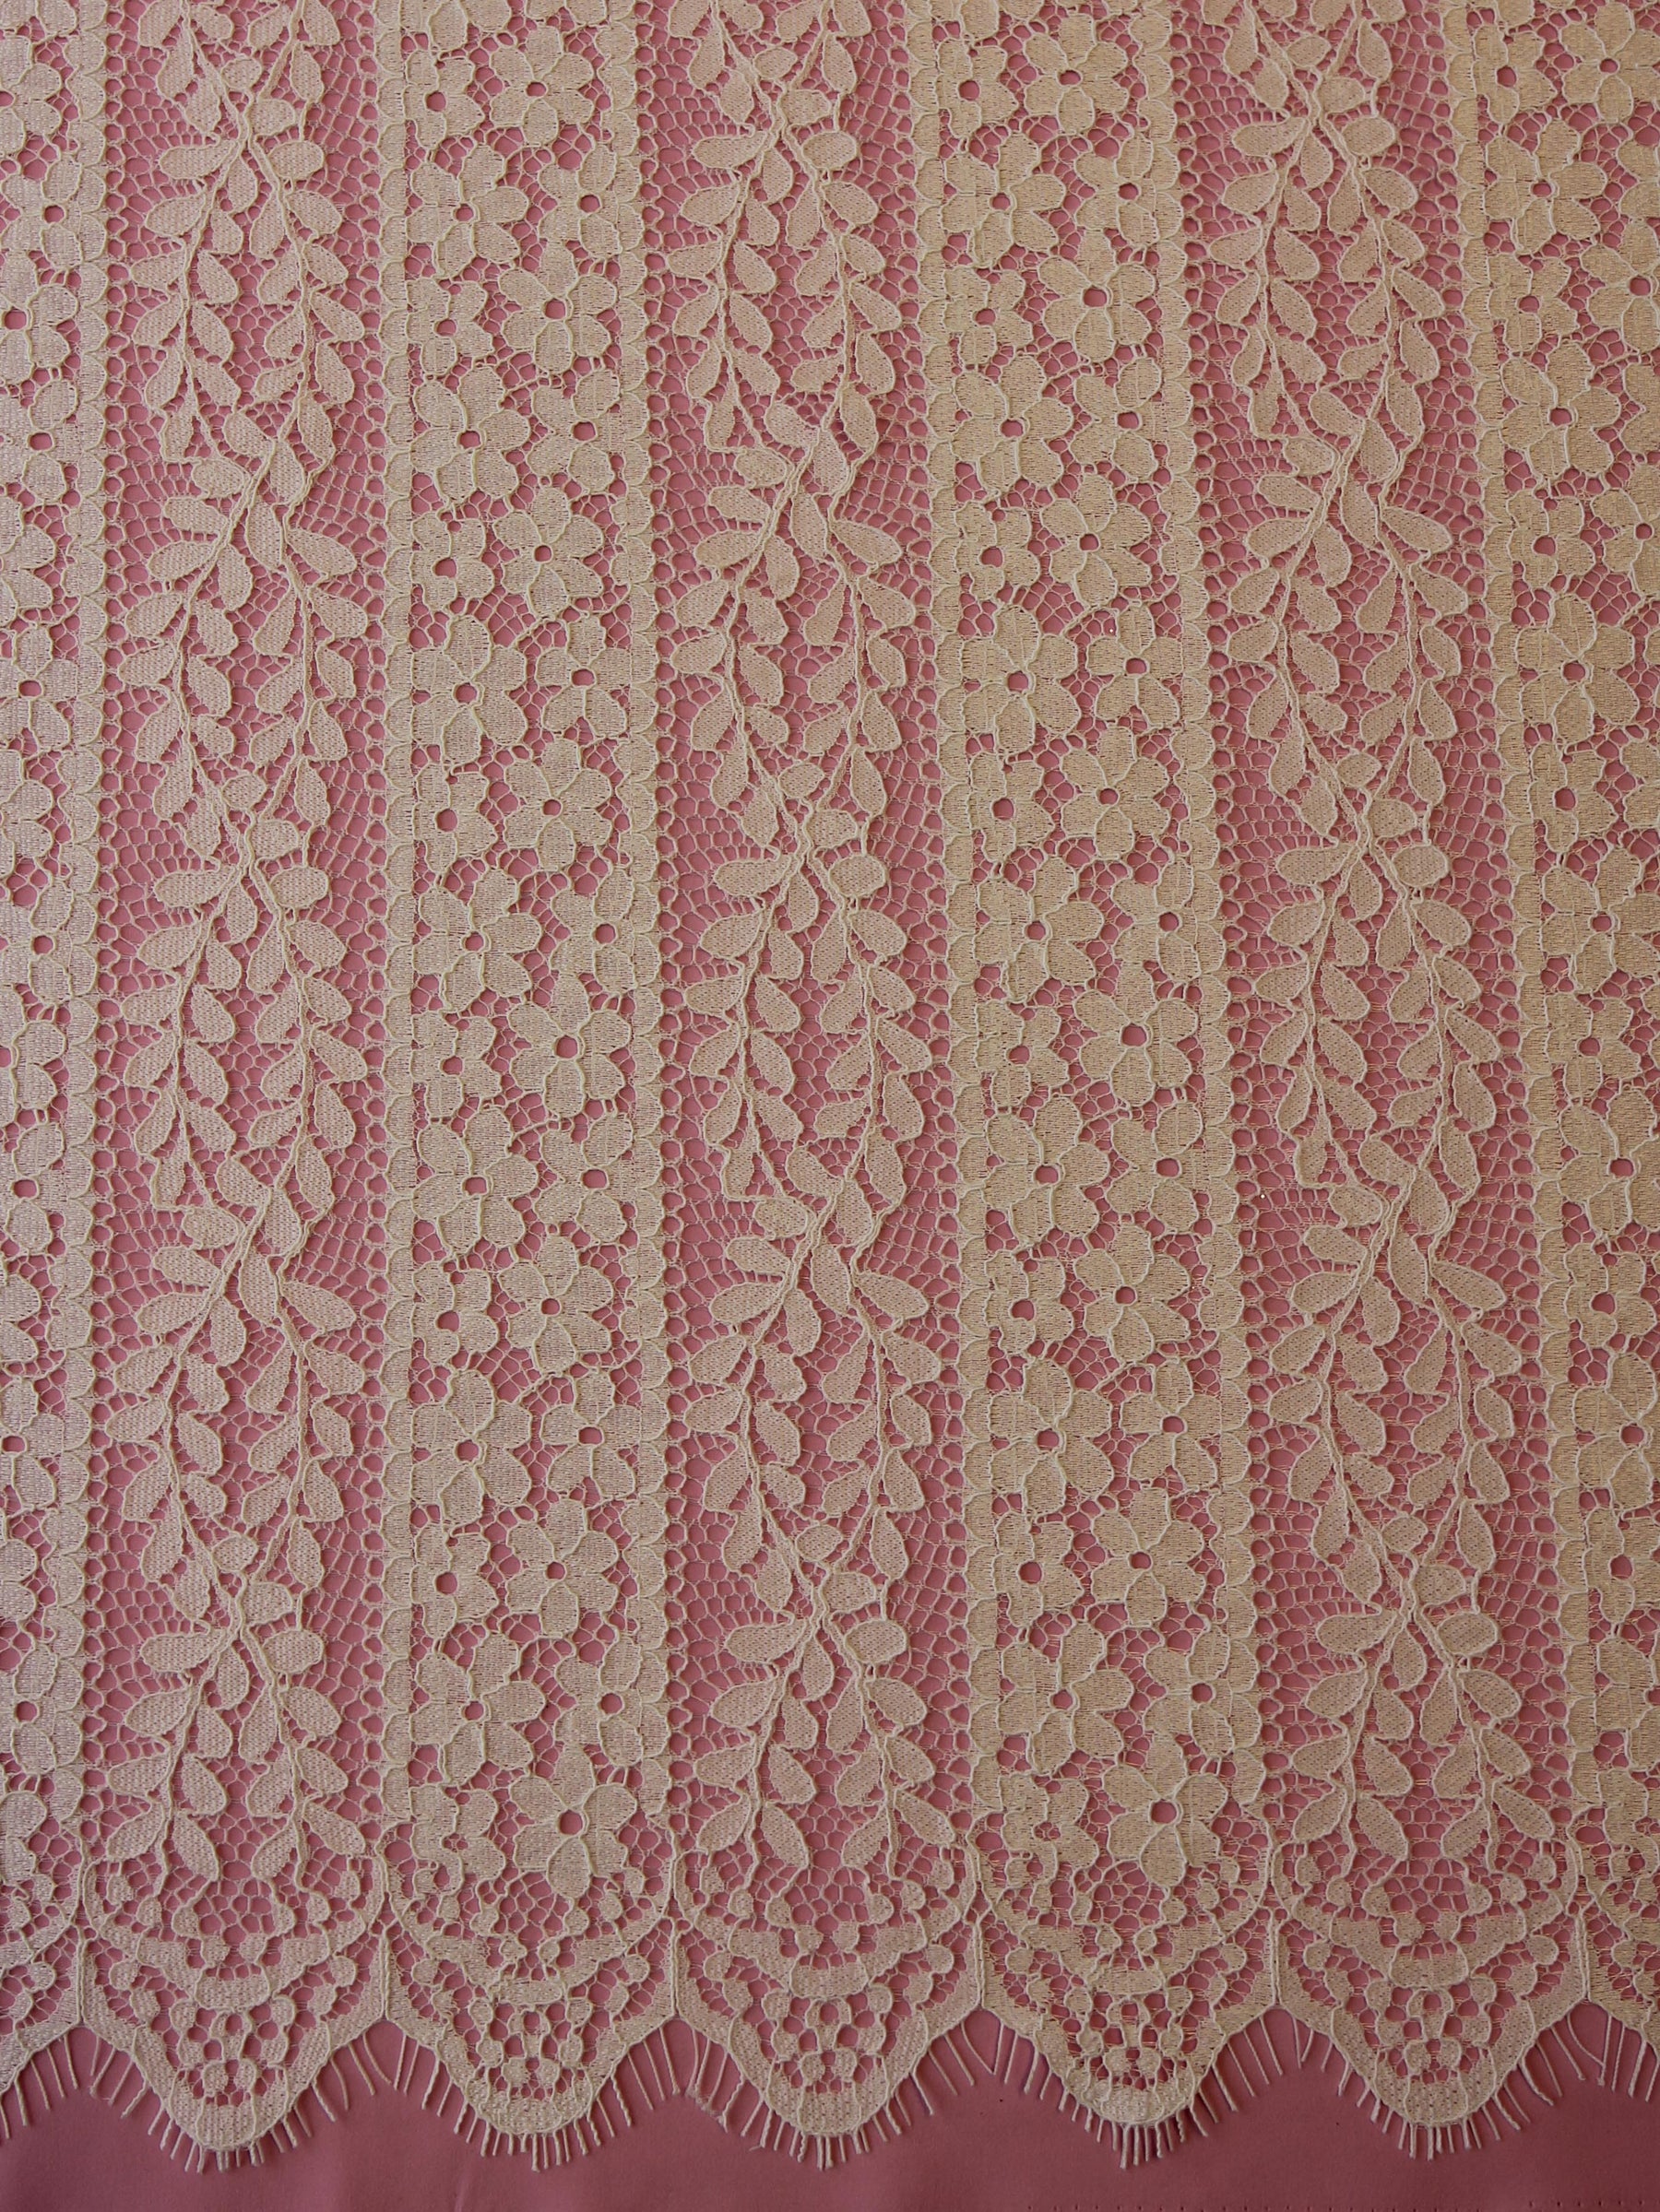 Ivory Corded Lace Panel - Rita